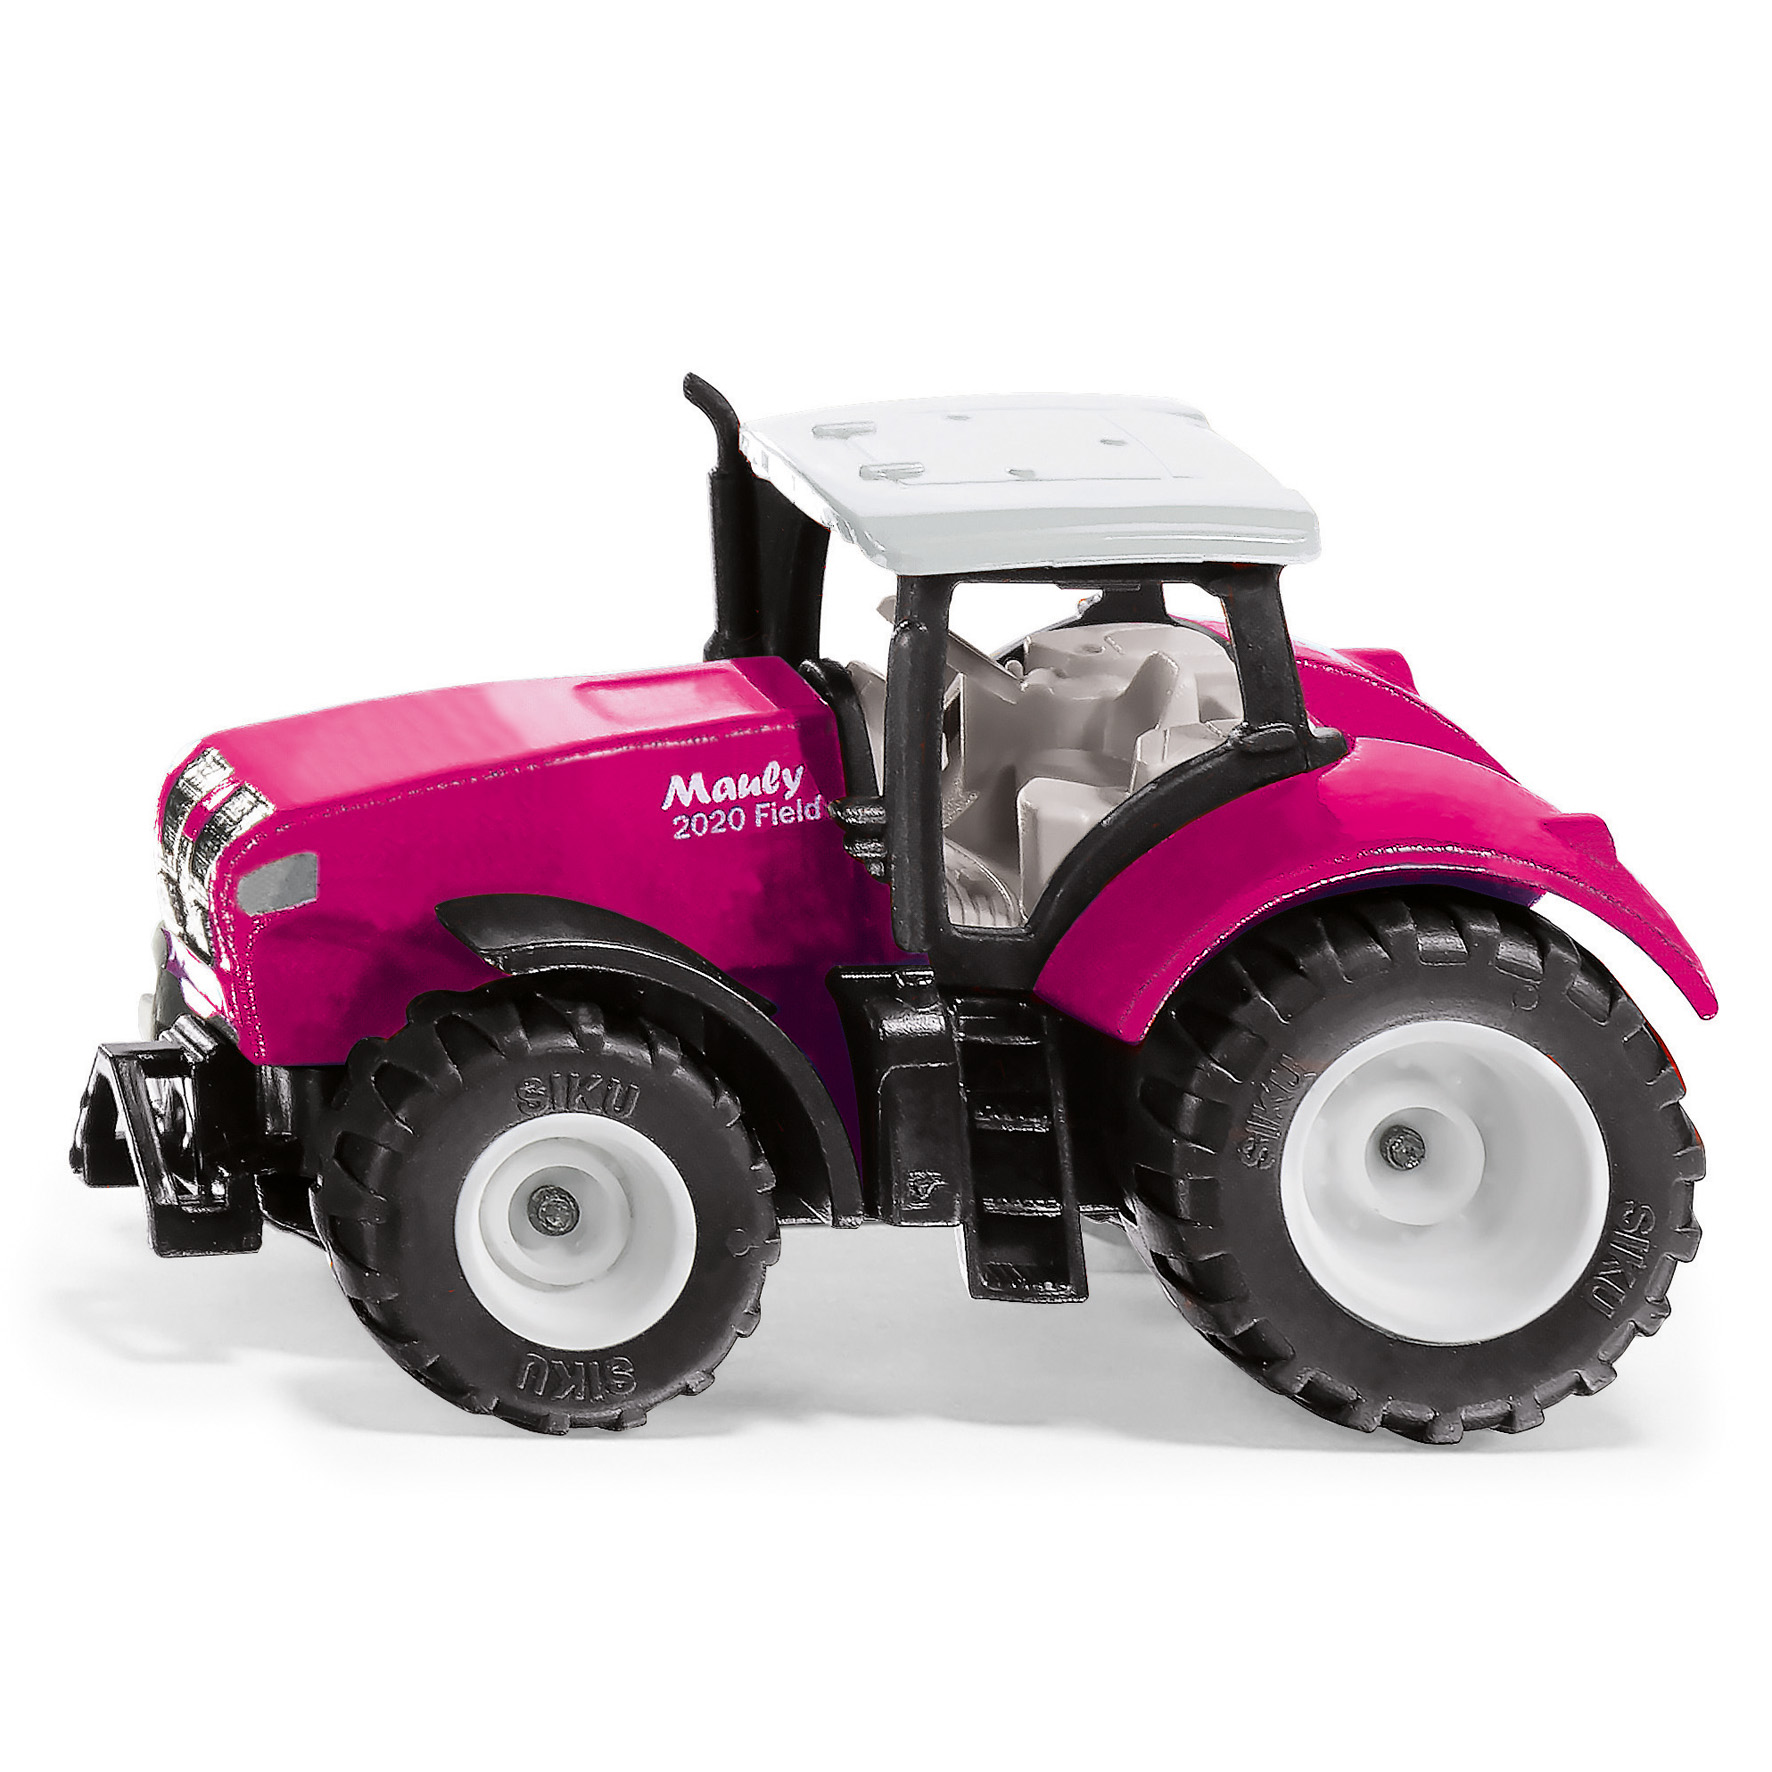 Siku mauly x540 tractor rosa